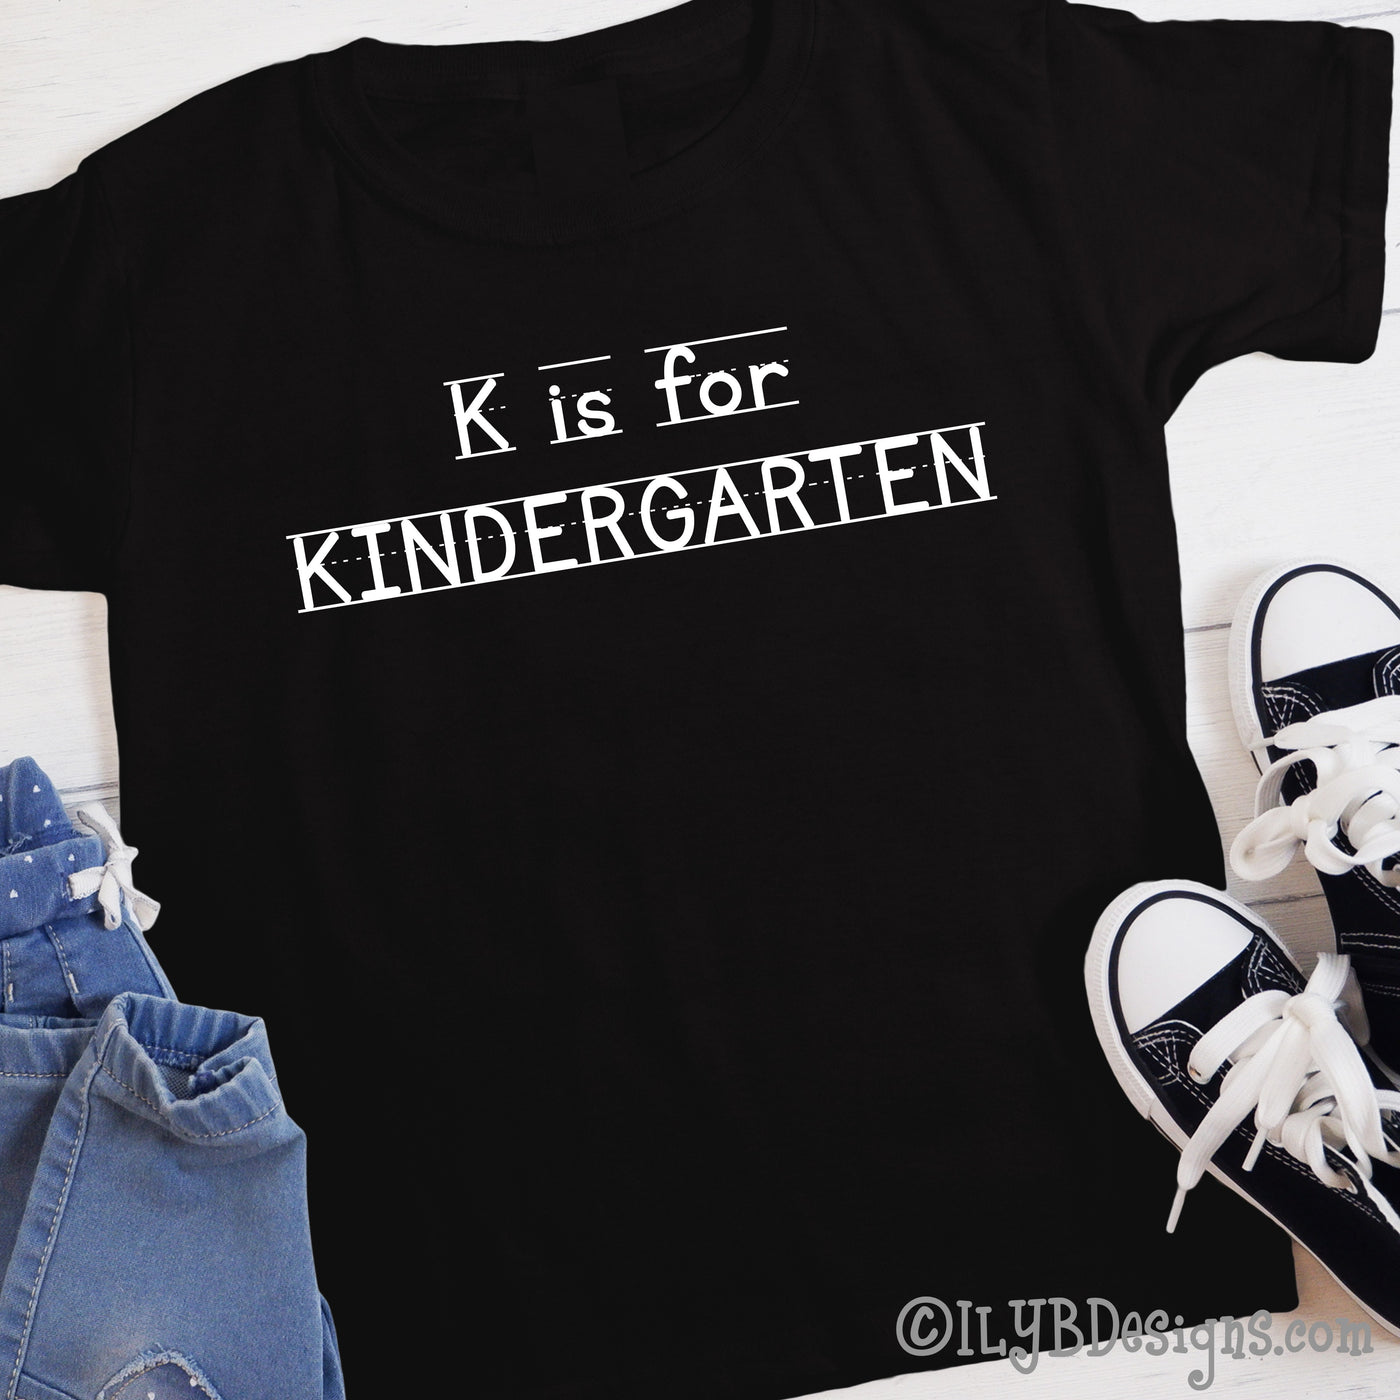 K is for Kindergarten Shirt for Kids | 1st Day of School Shirt